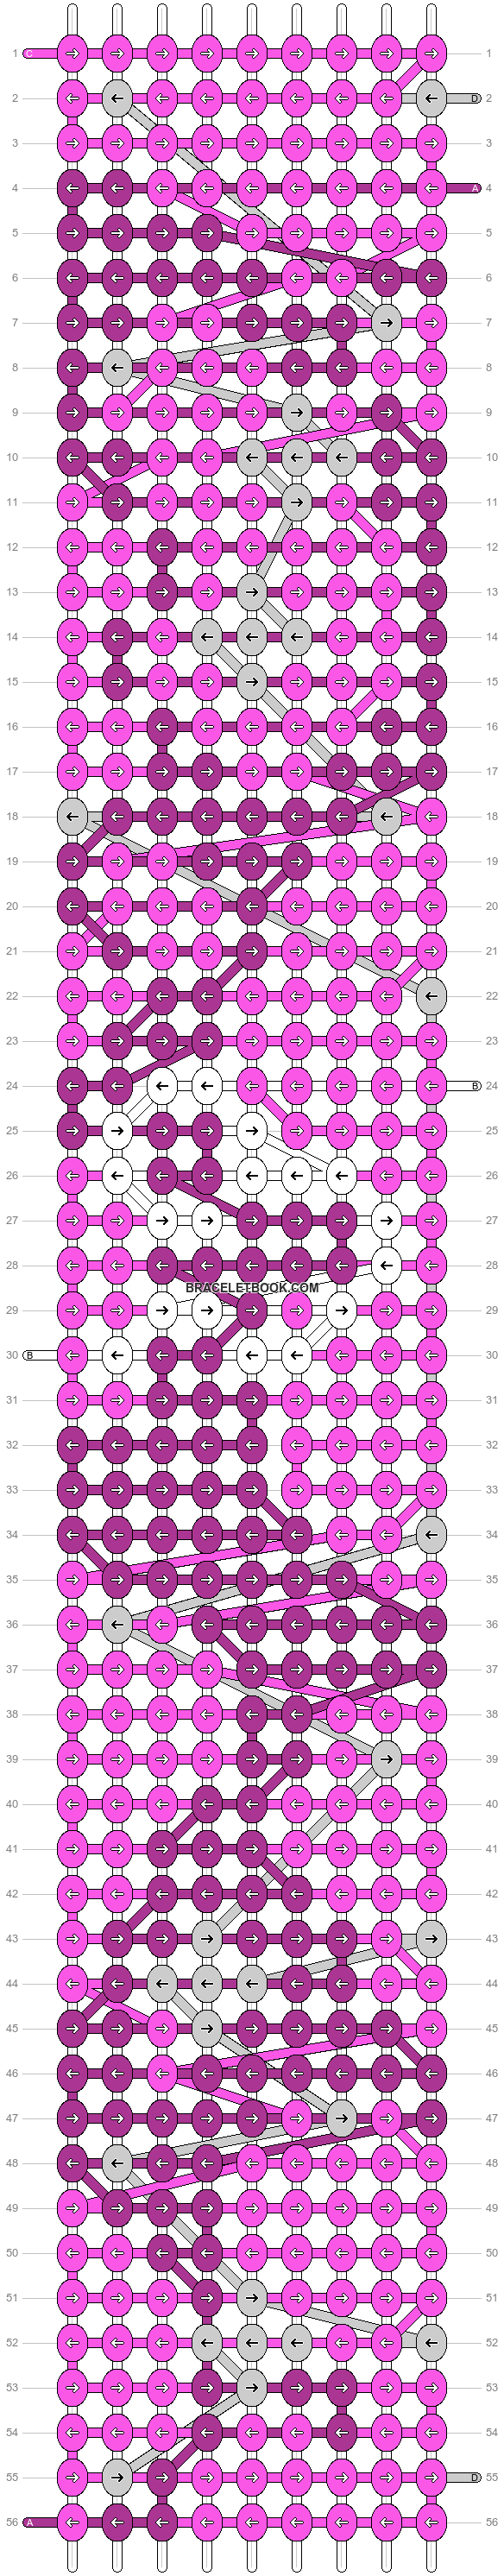 Alpha pattern #84277 variation #153364 pattern